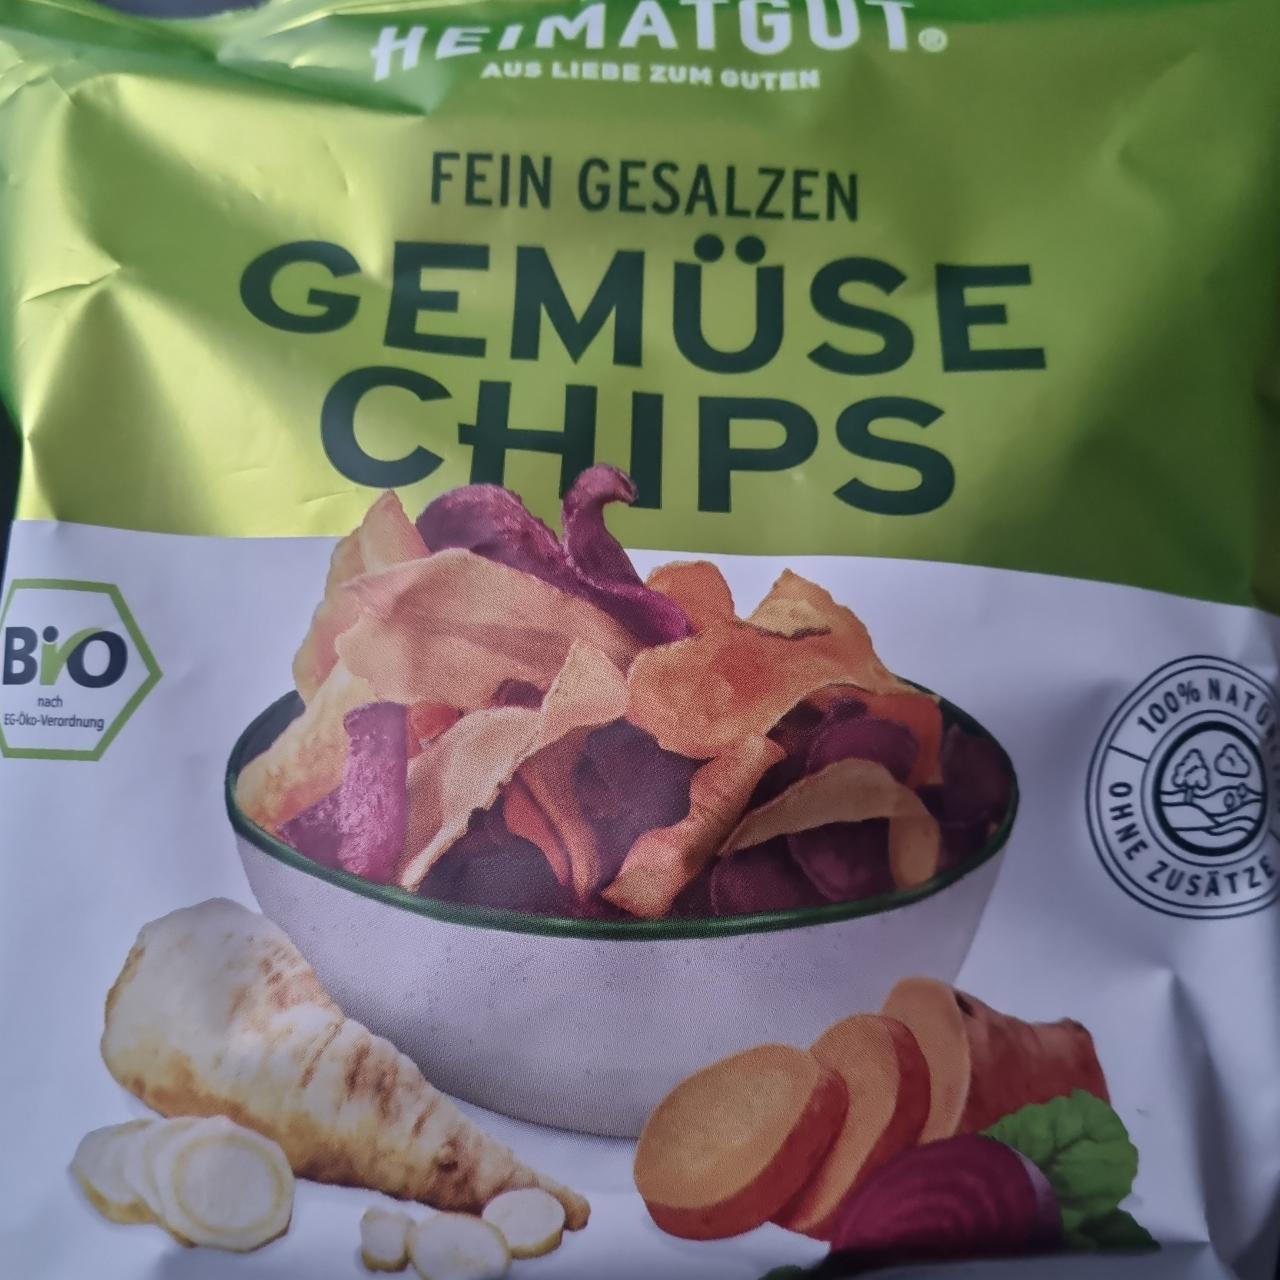 Fotografie - Bio Gemüse Chips fein gesalzen Heimatgut